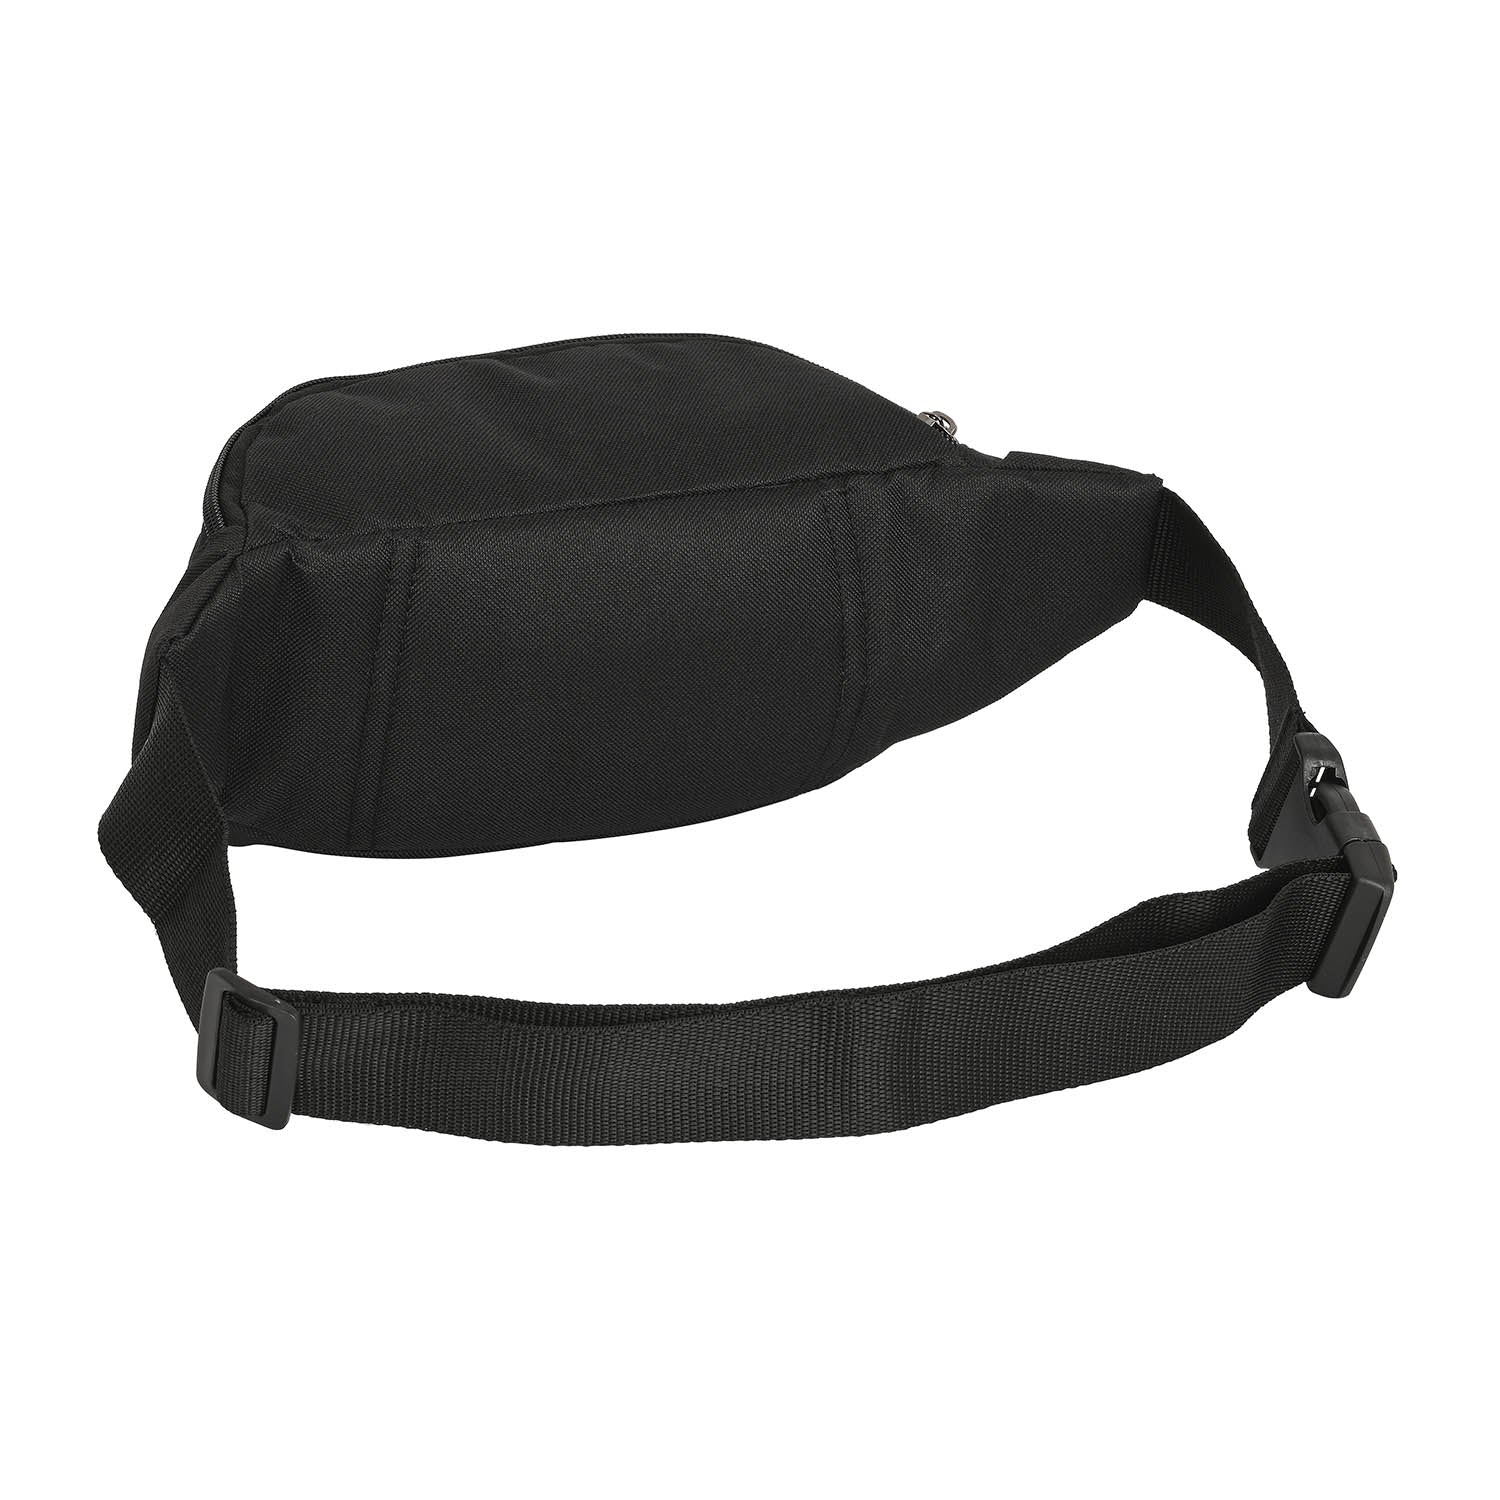 Black bum bag with crest